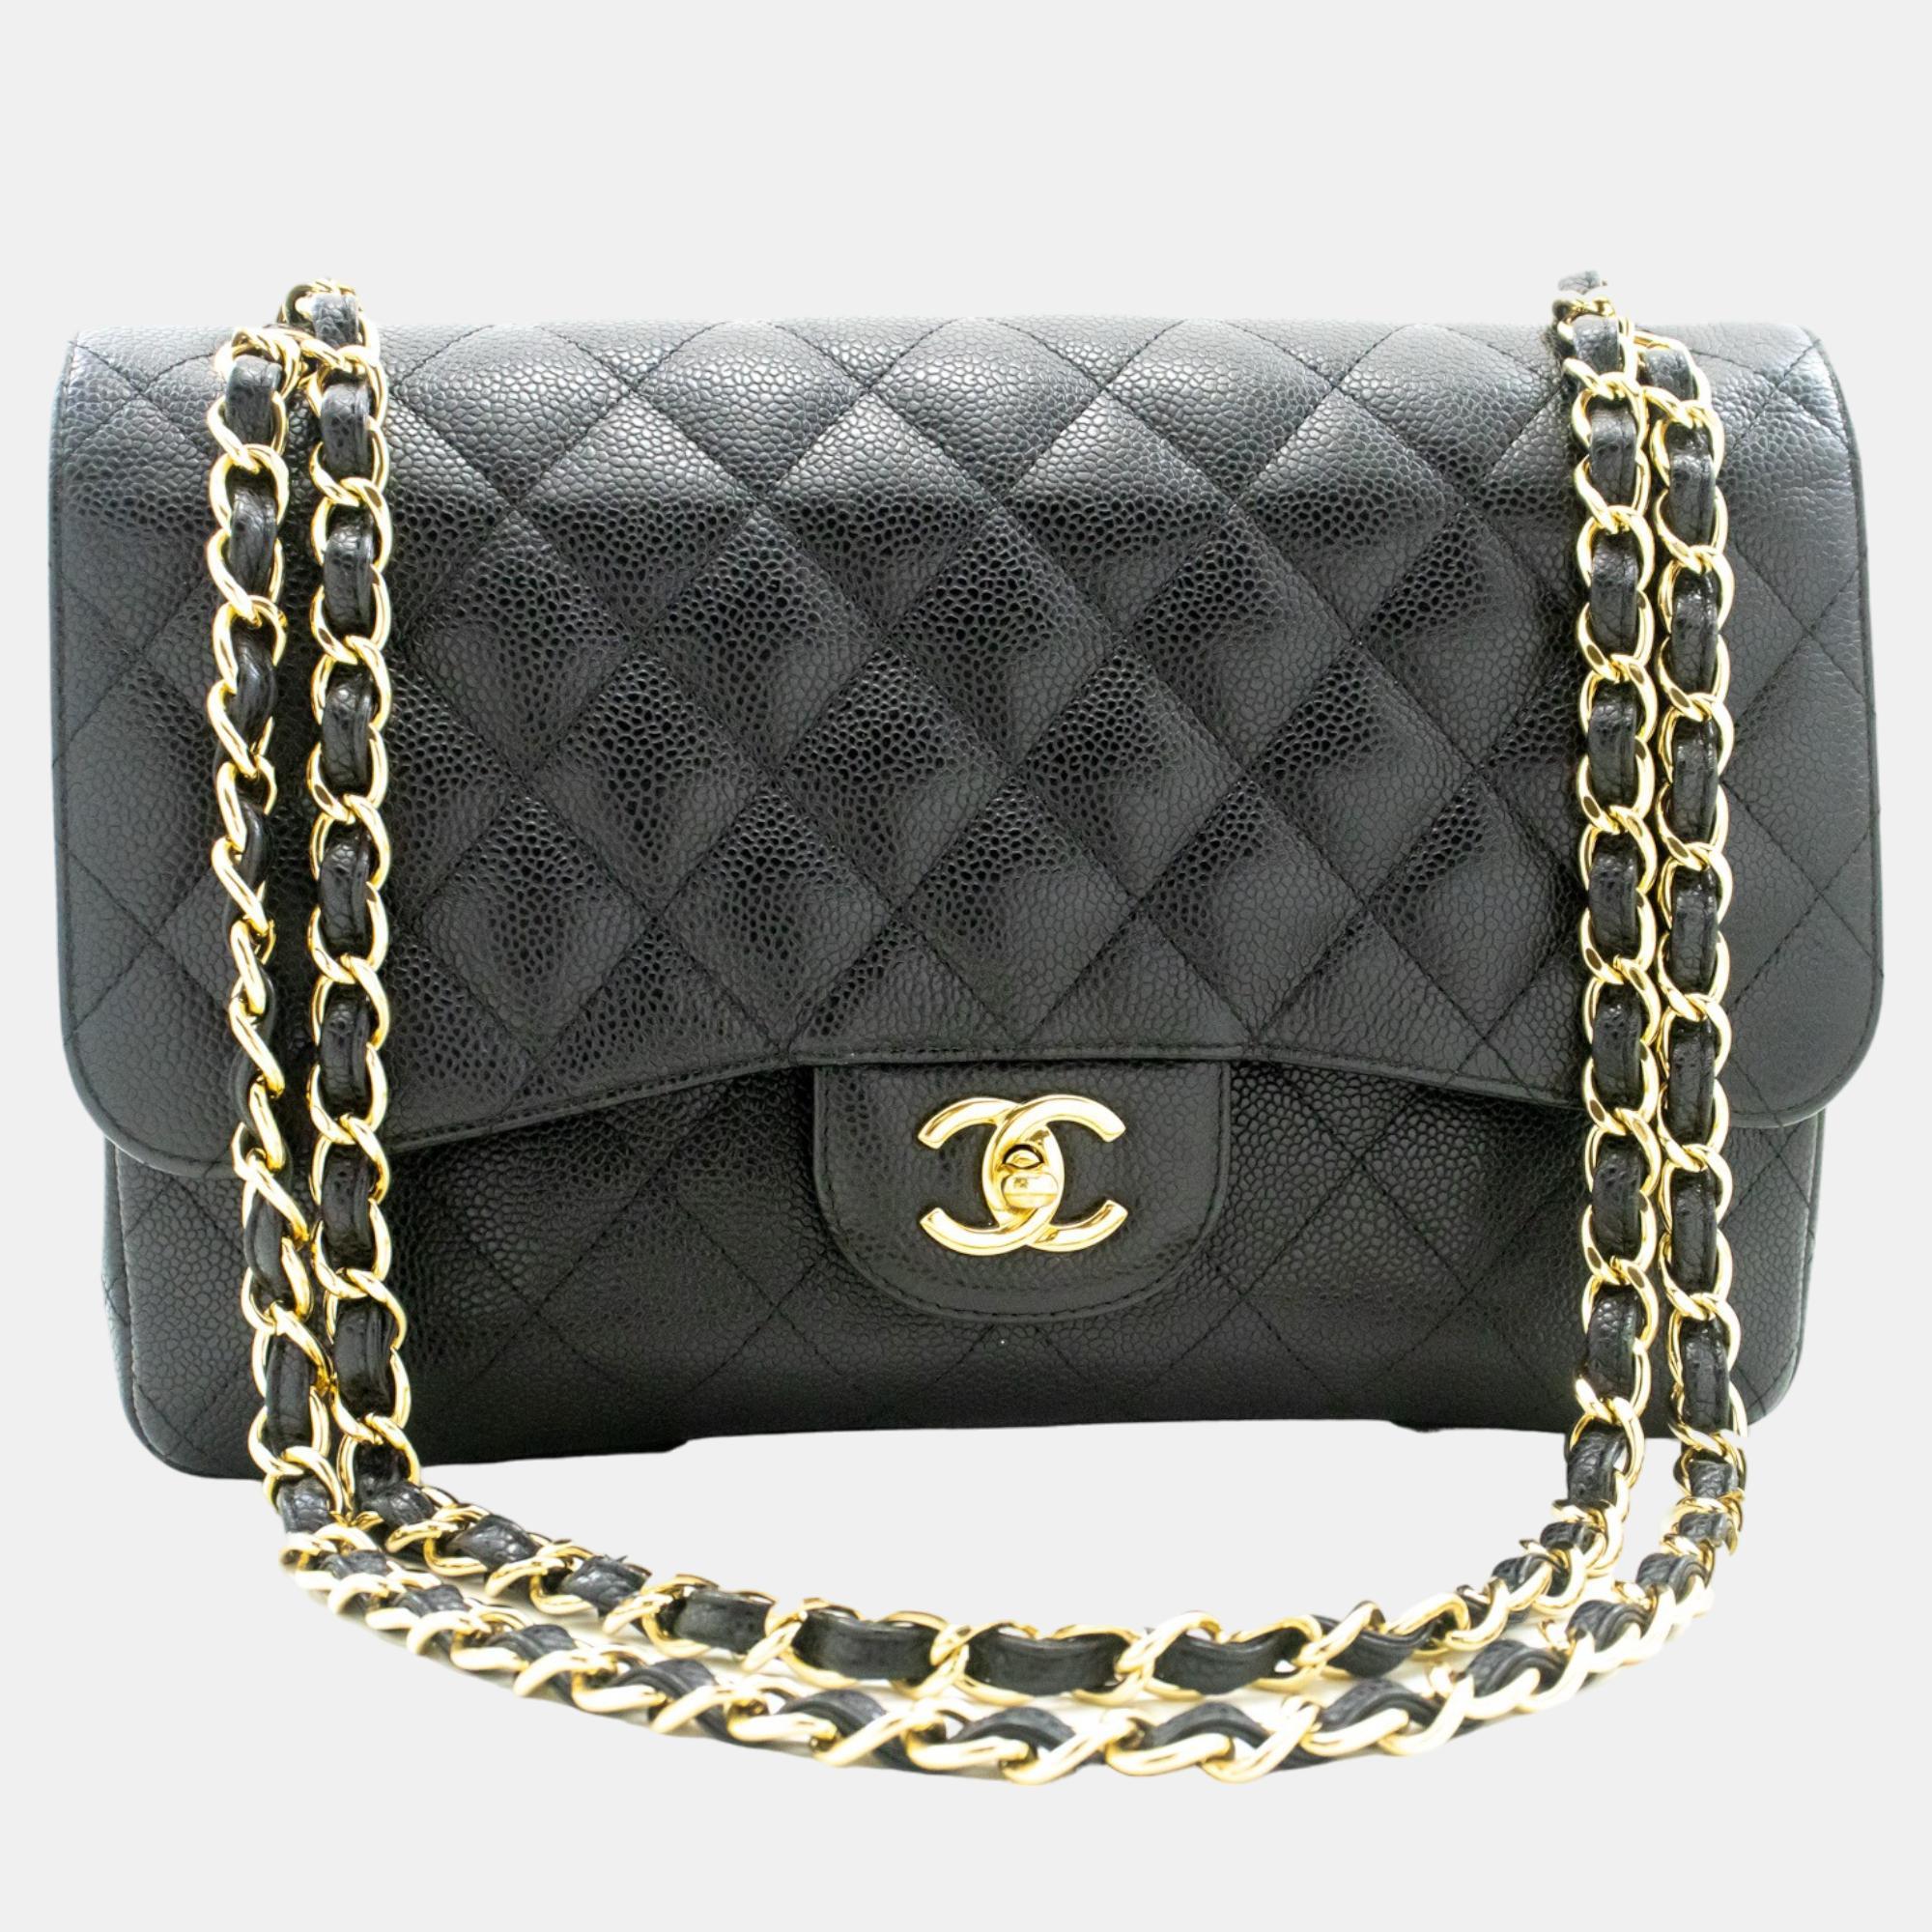 Chanel black caviar leather large classic double flap shoulder bag